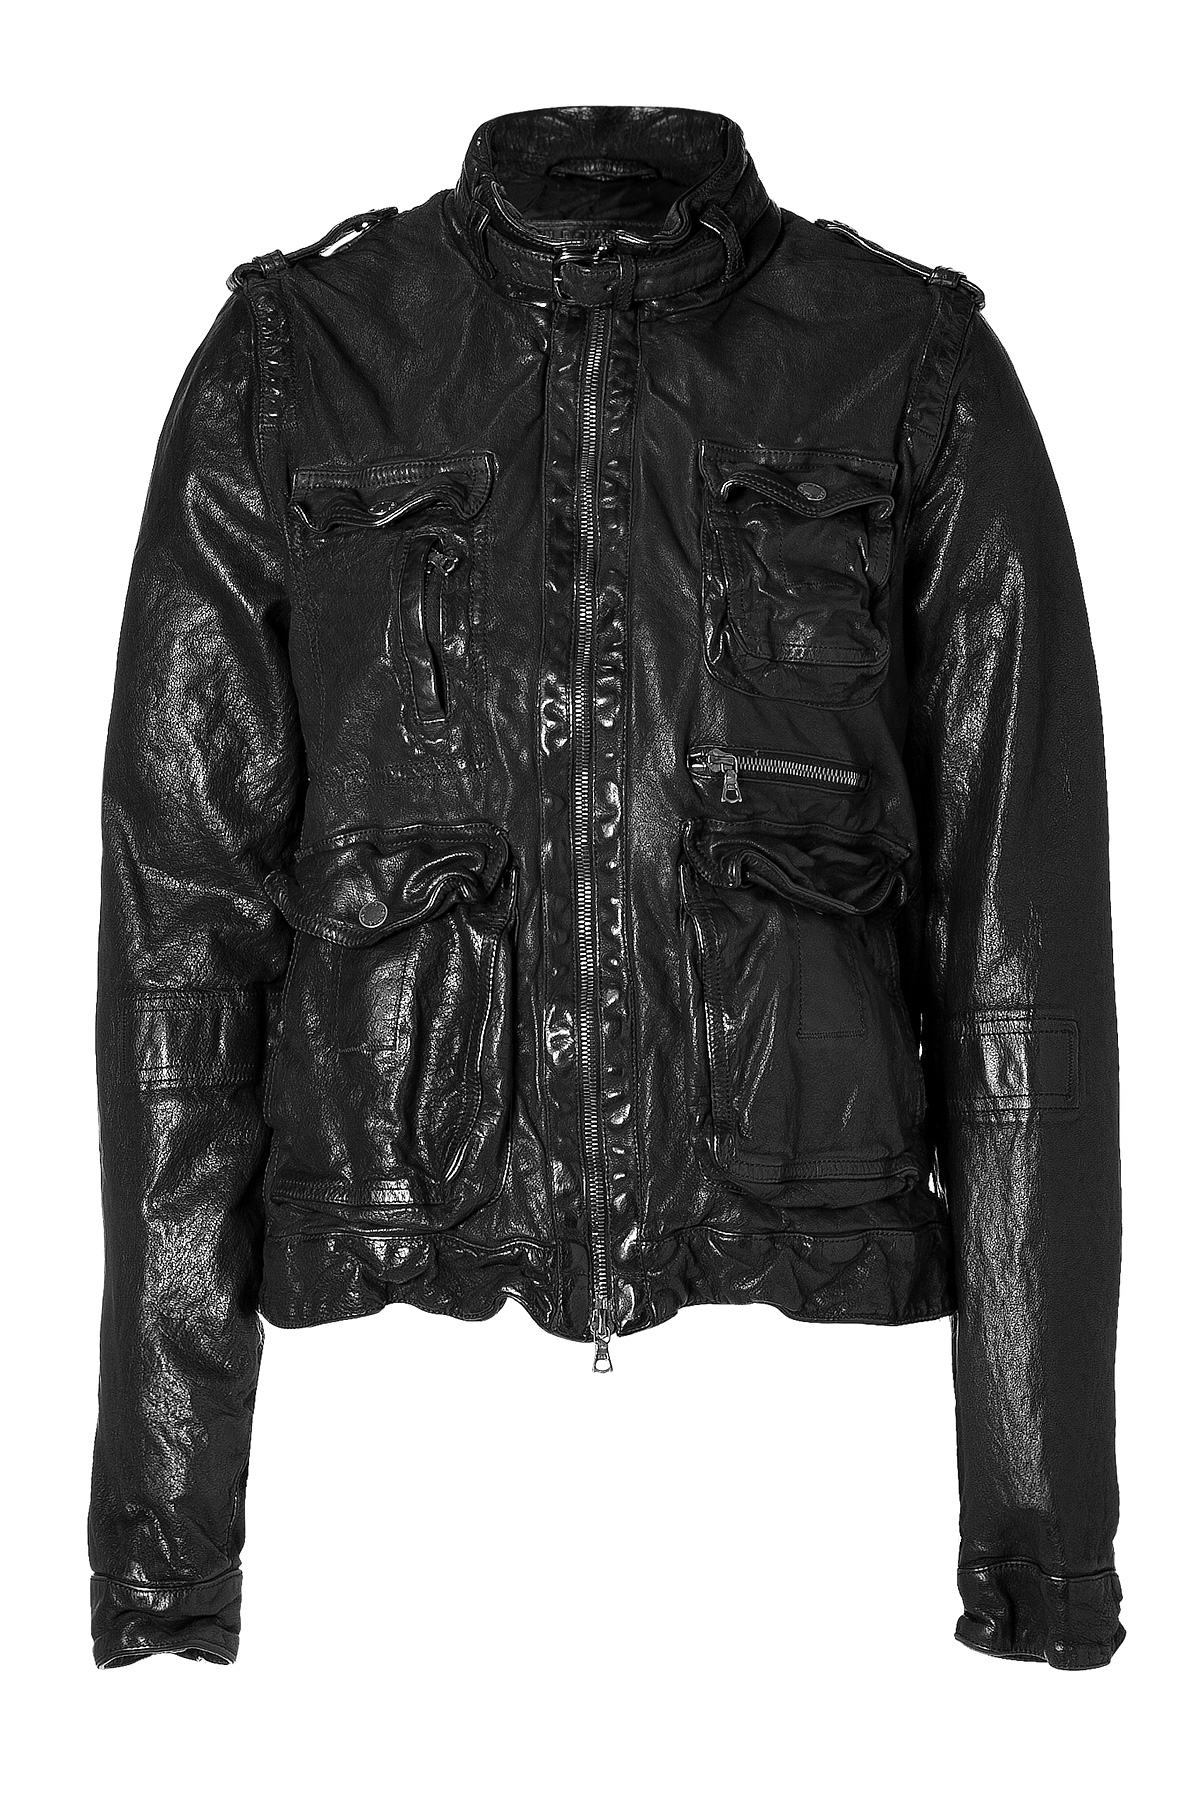 Neil Barrett Black Washed Leather Jacket in Black | Lyst